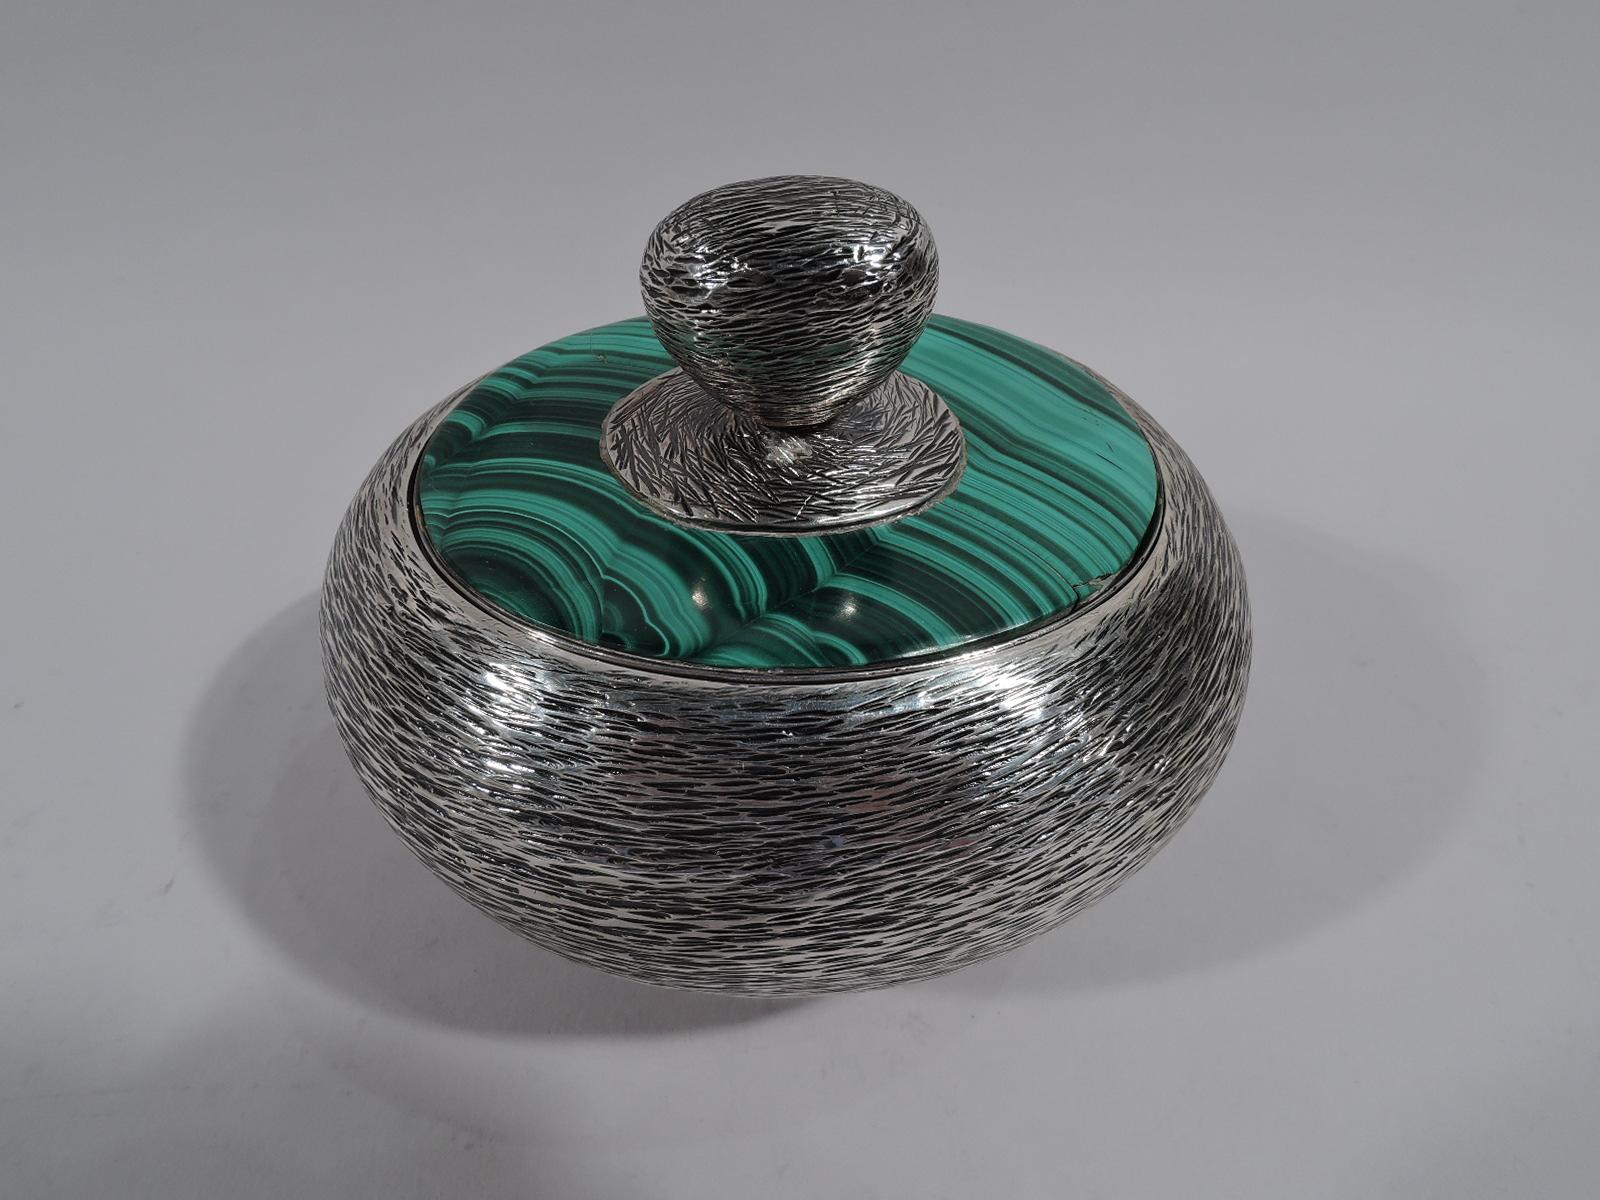 American Modern Handwrought Sterling Silver & Malachite Box by New York Maker